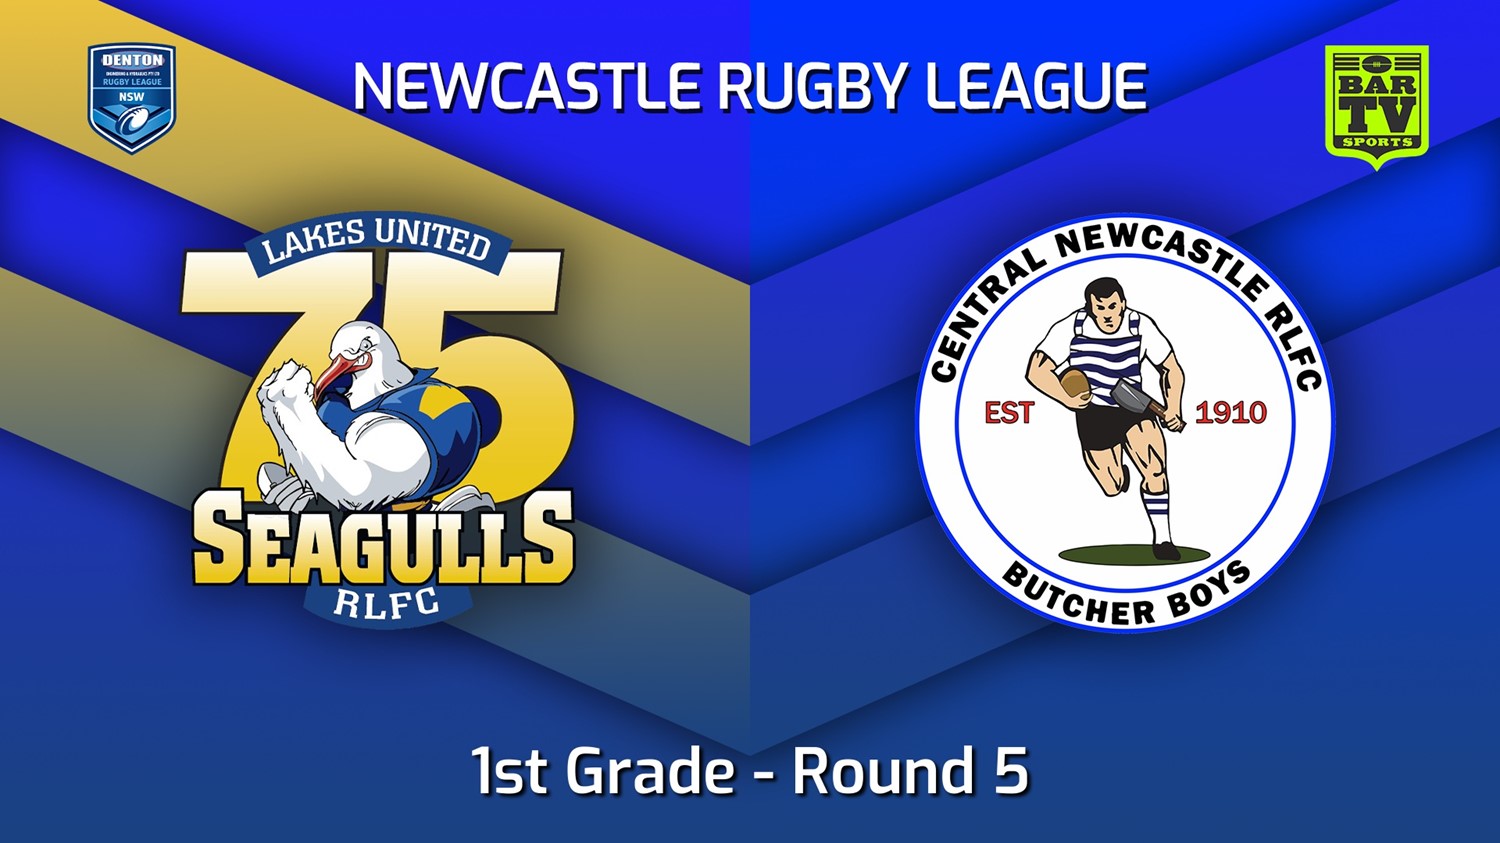 220424-Newcastle Round 5 - 1st Grade - Lakes United v Central Newcastle Slate Image